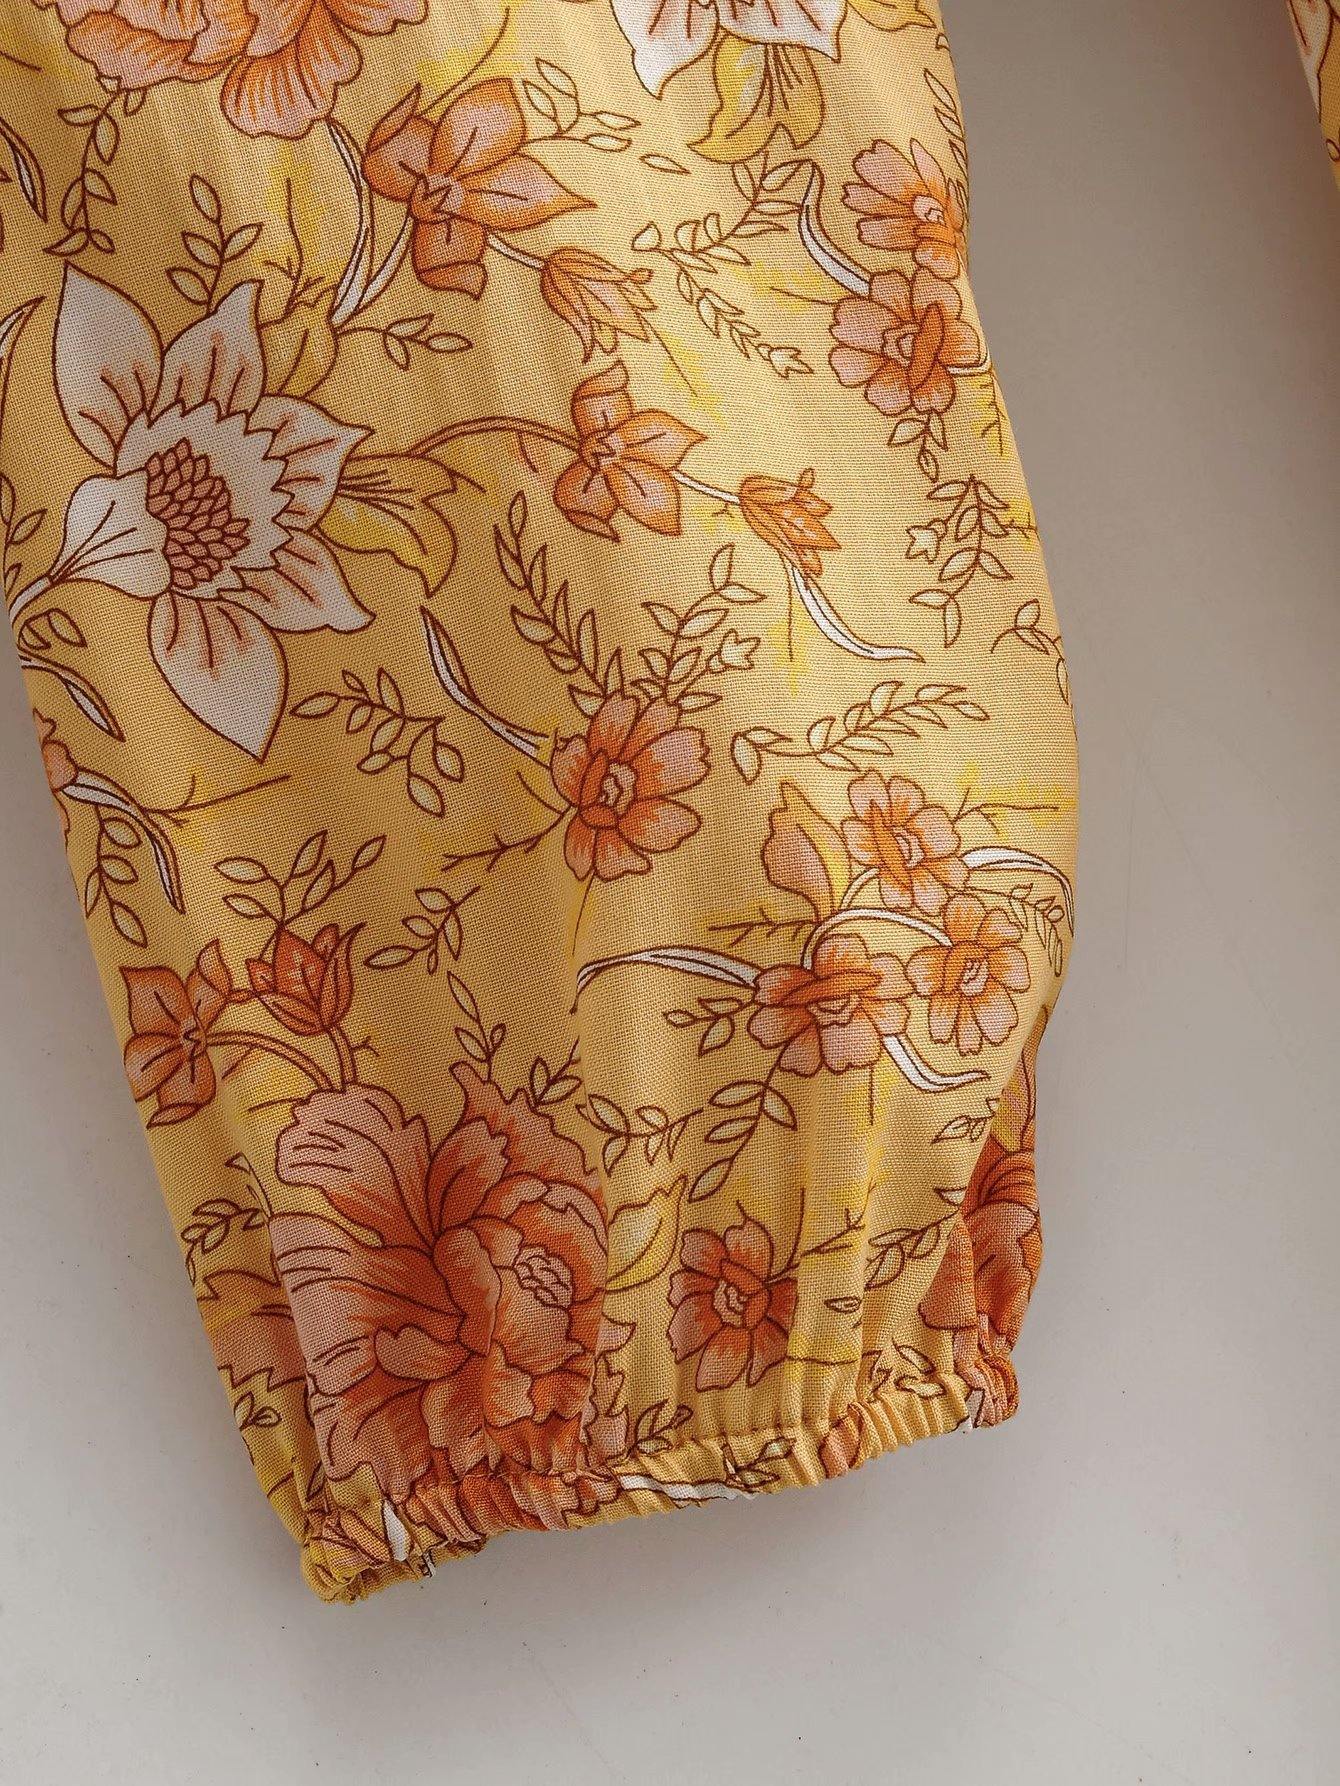 Summer V-Neck Floral Print Short Dresses-STYLEGOING